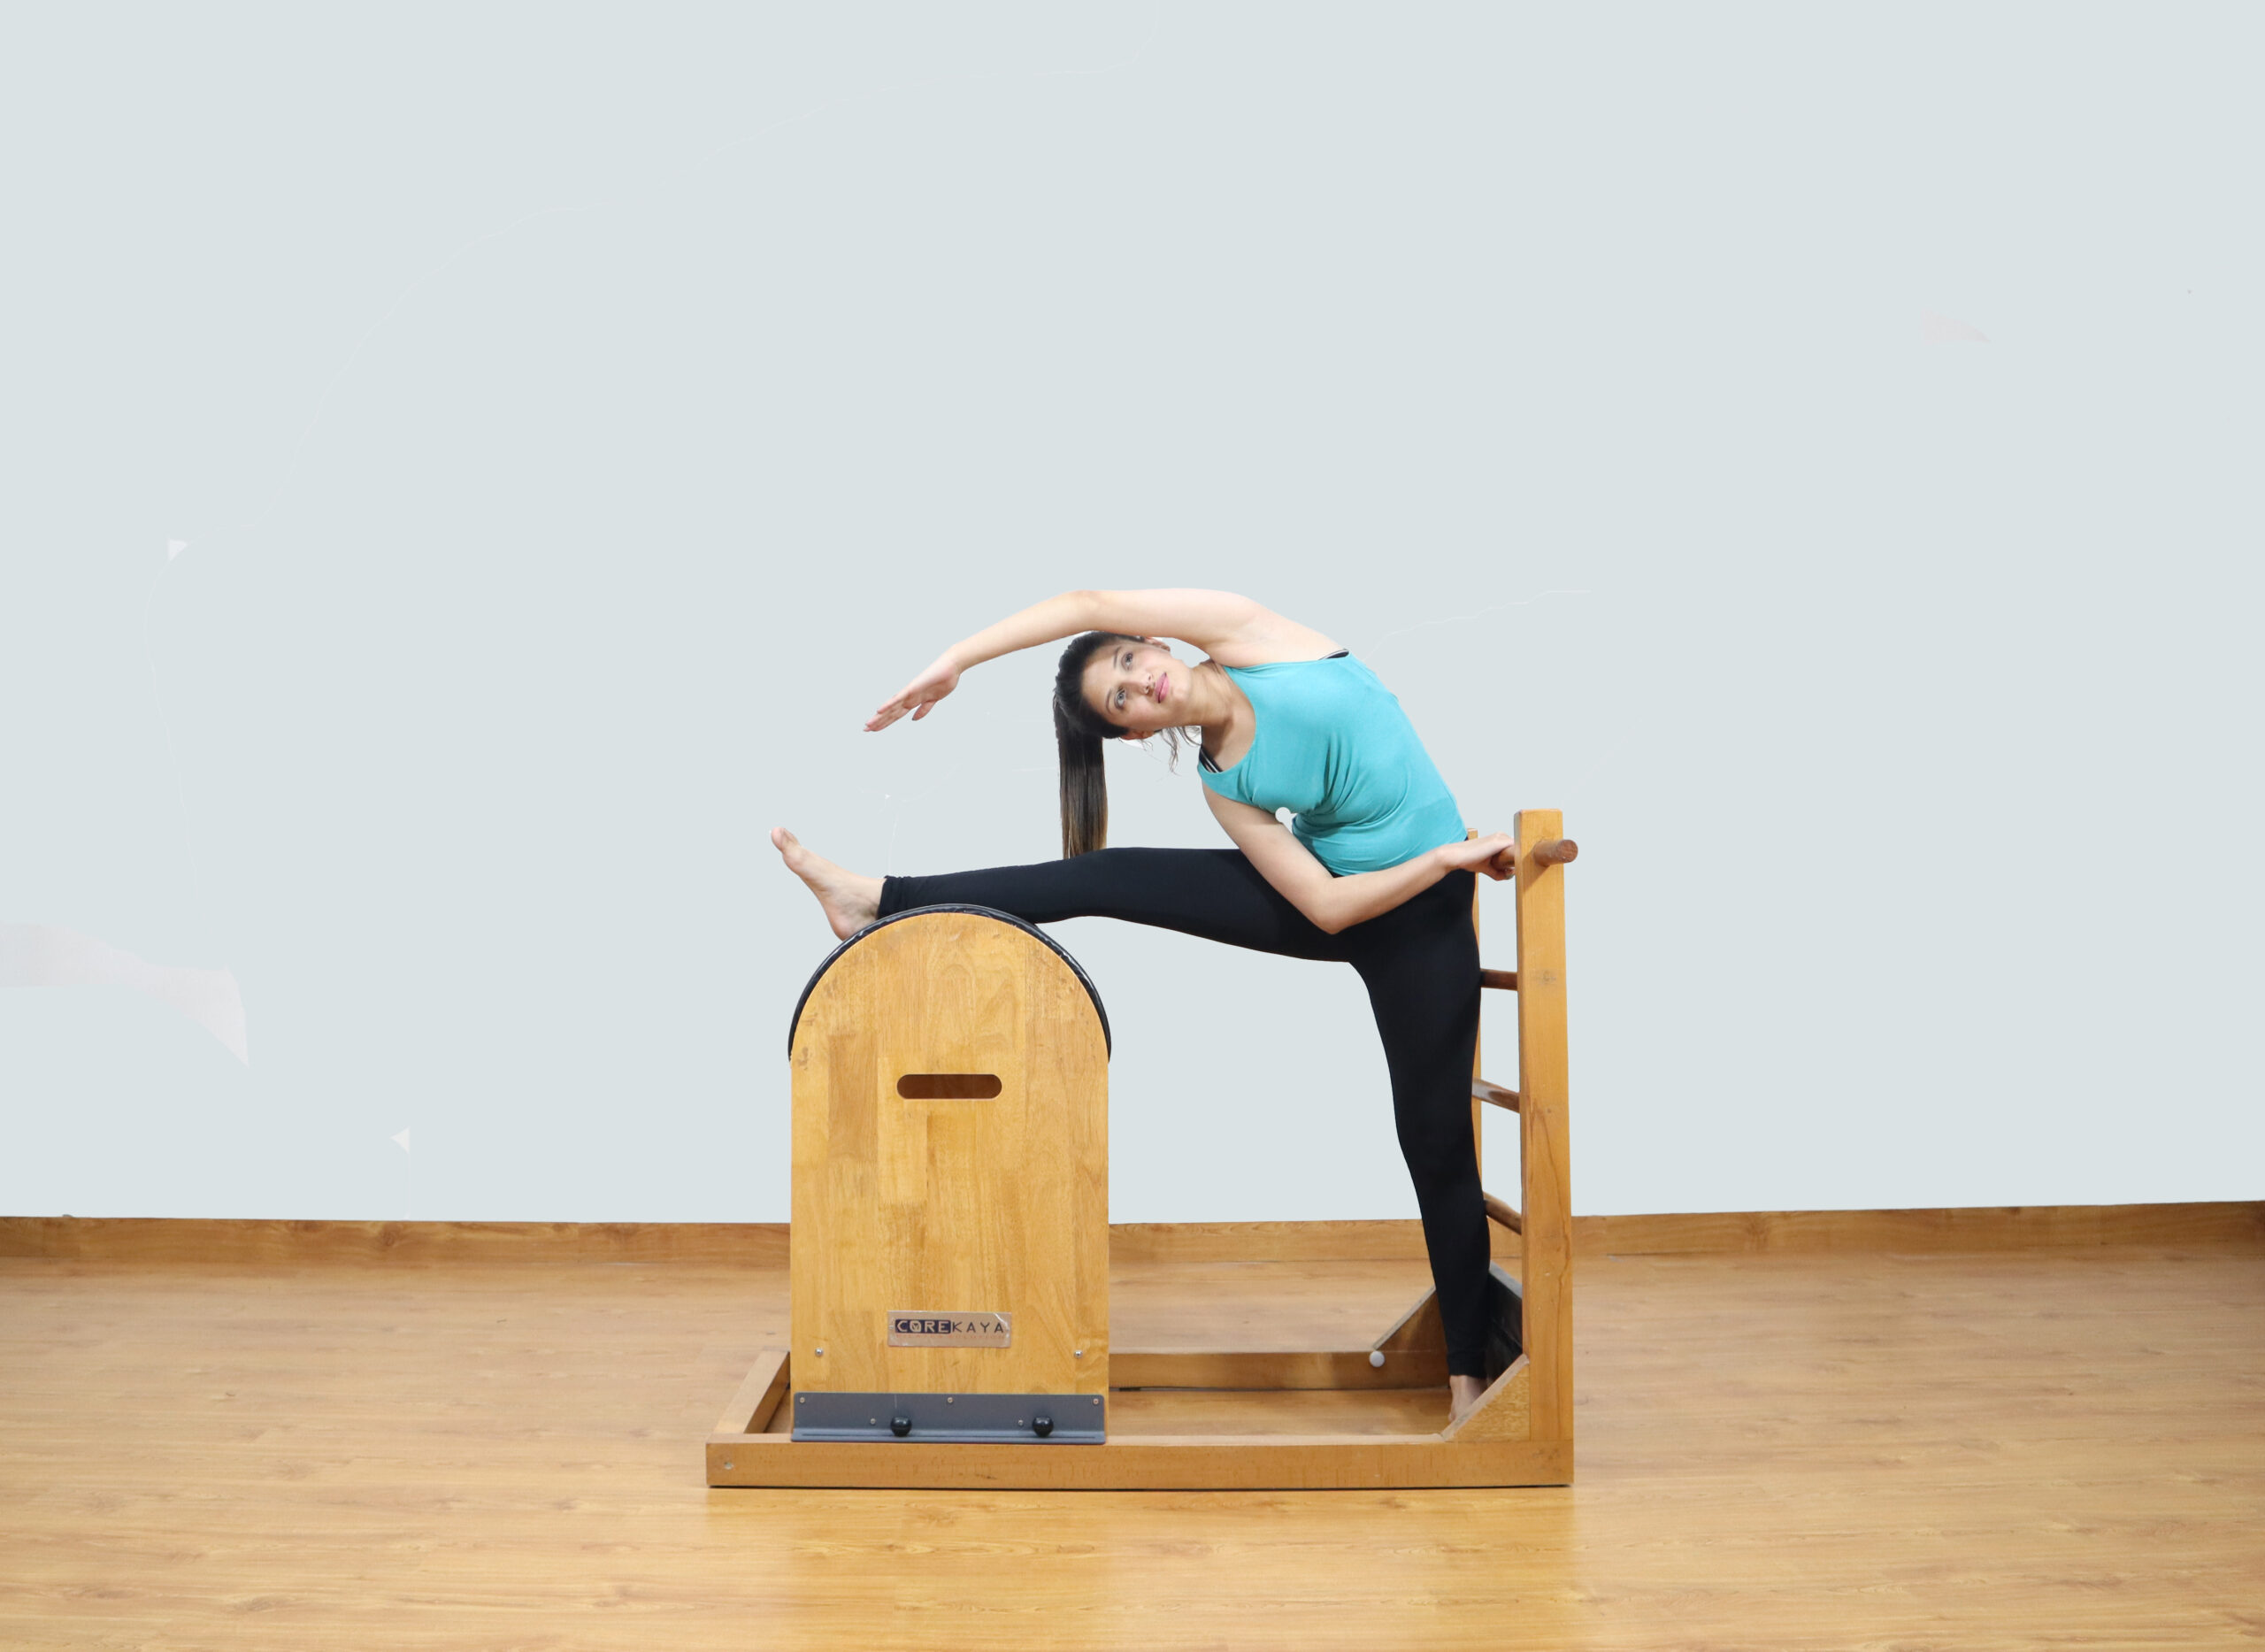 Pilates Ladder Barrel : How it helps improve core stabilization